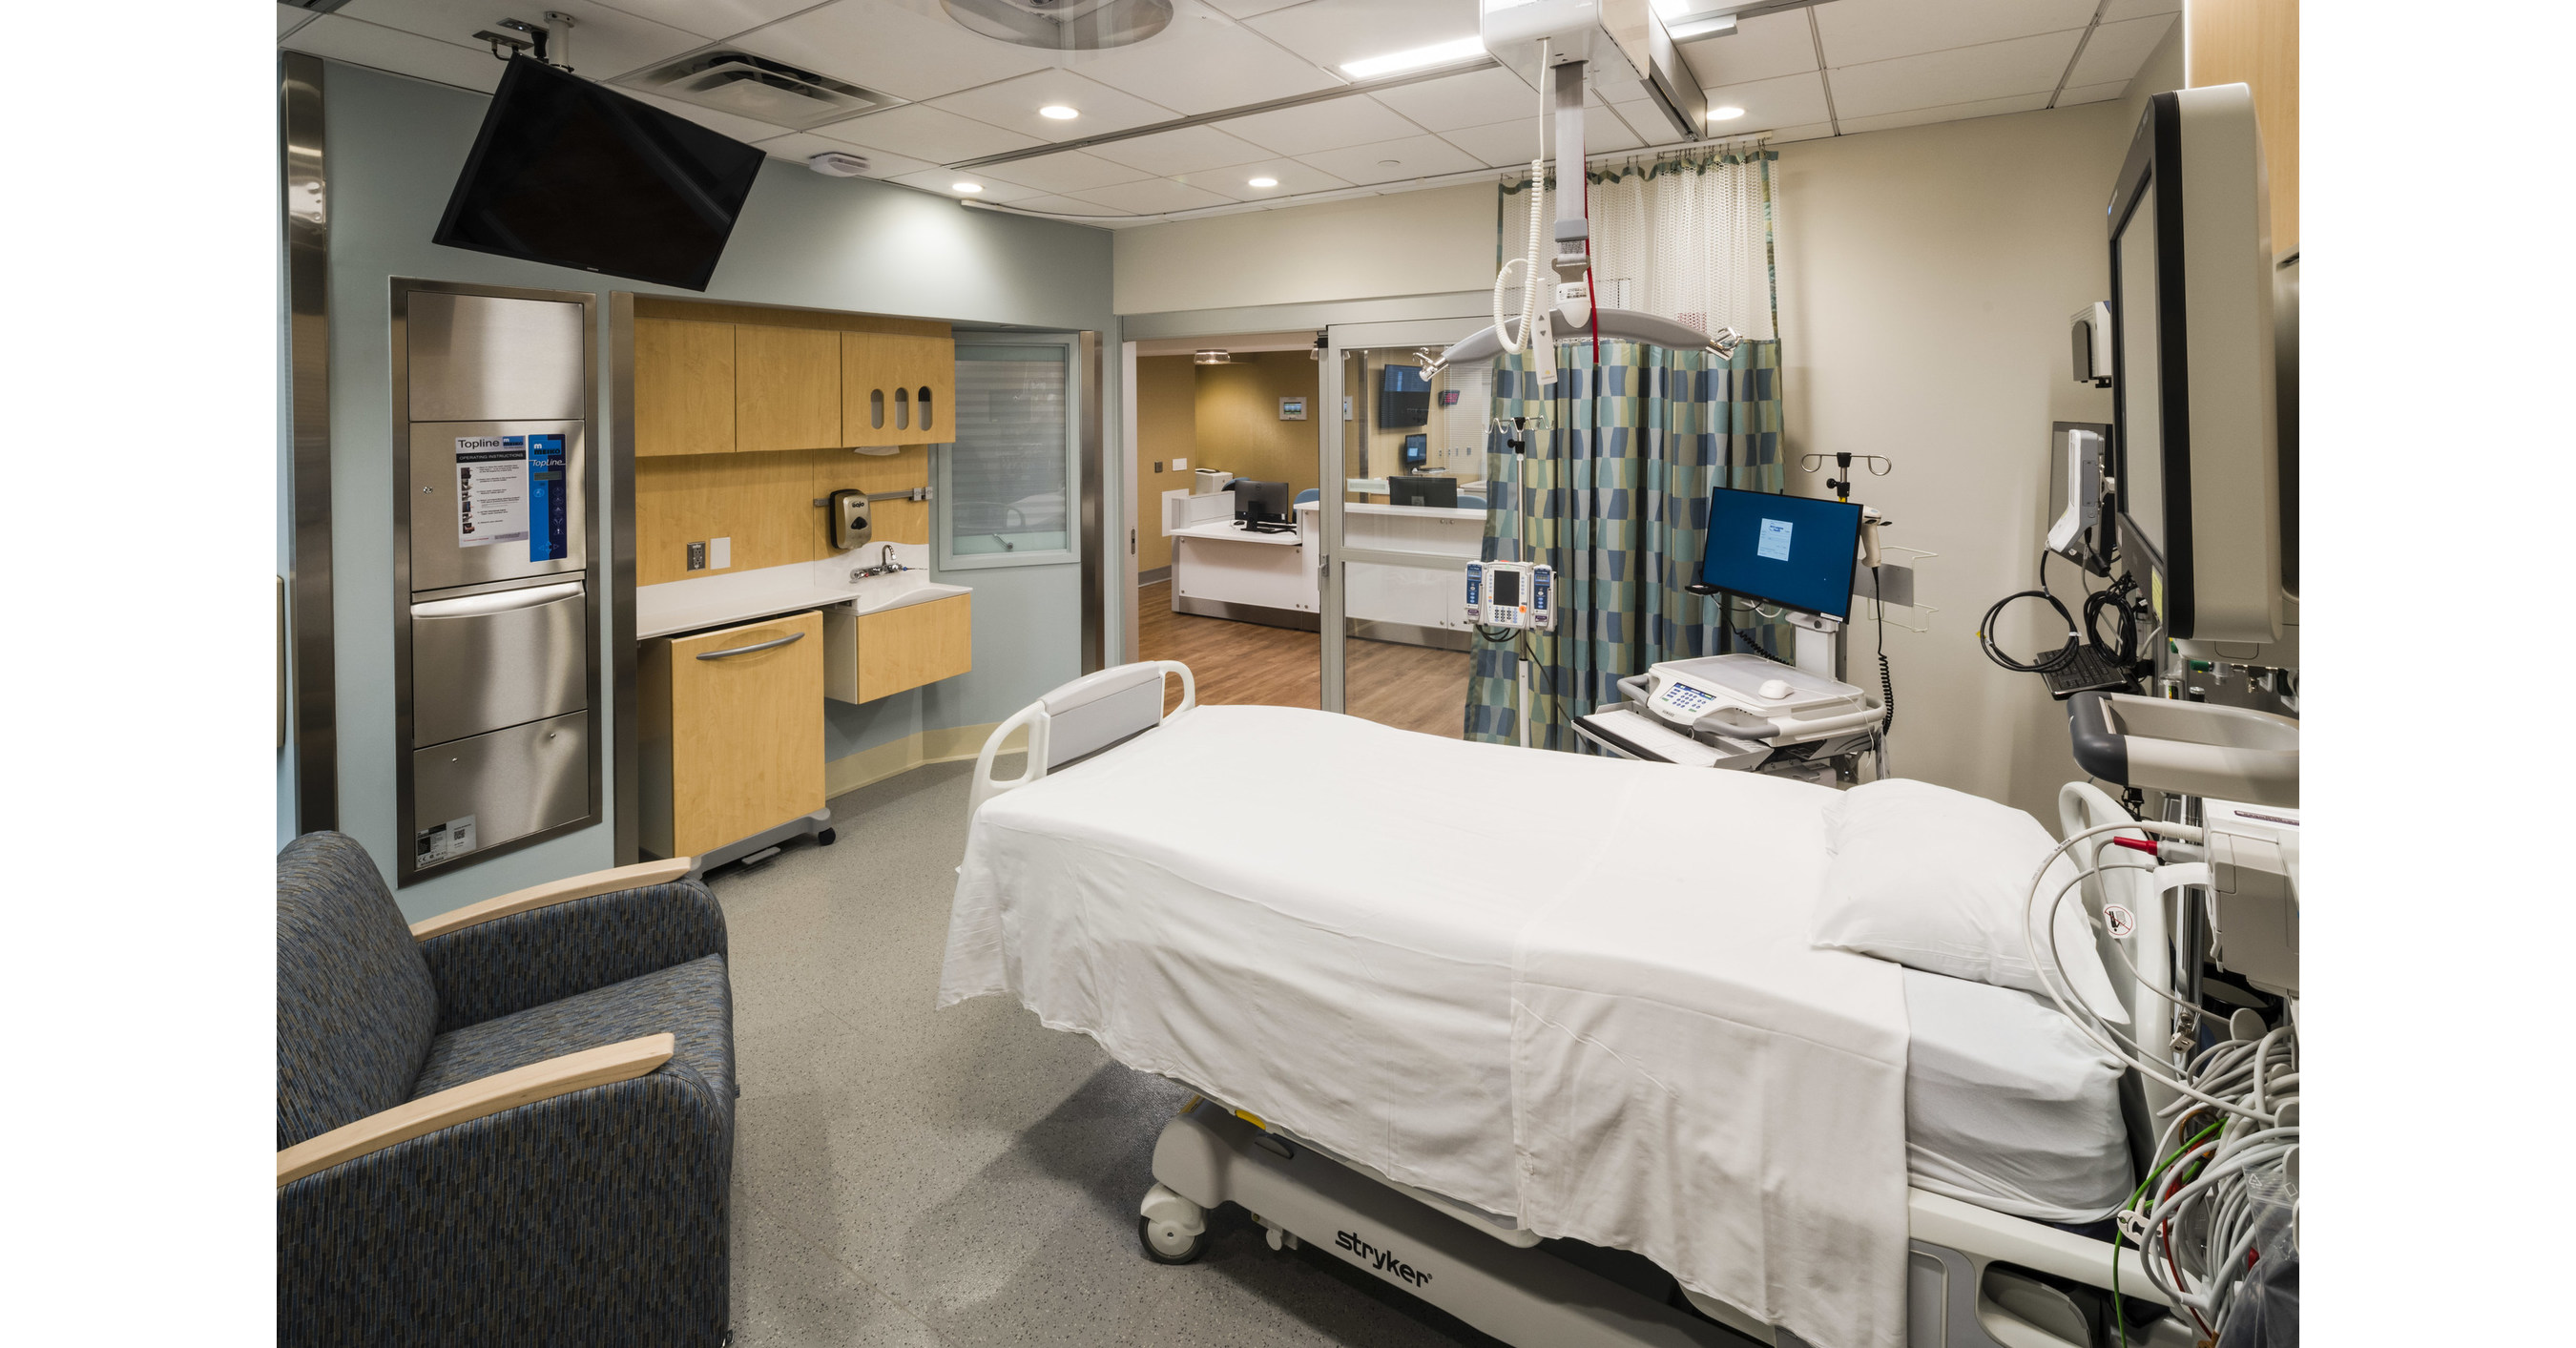 Nyu Langone Hospital Brooklyn Sets New Standard With State